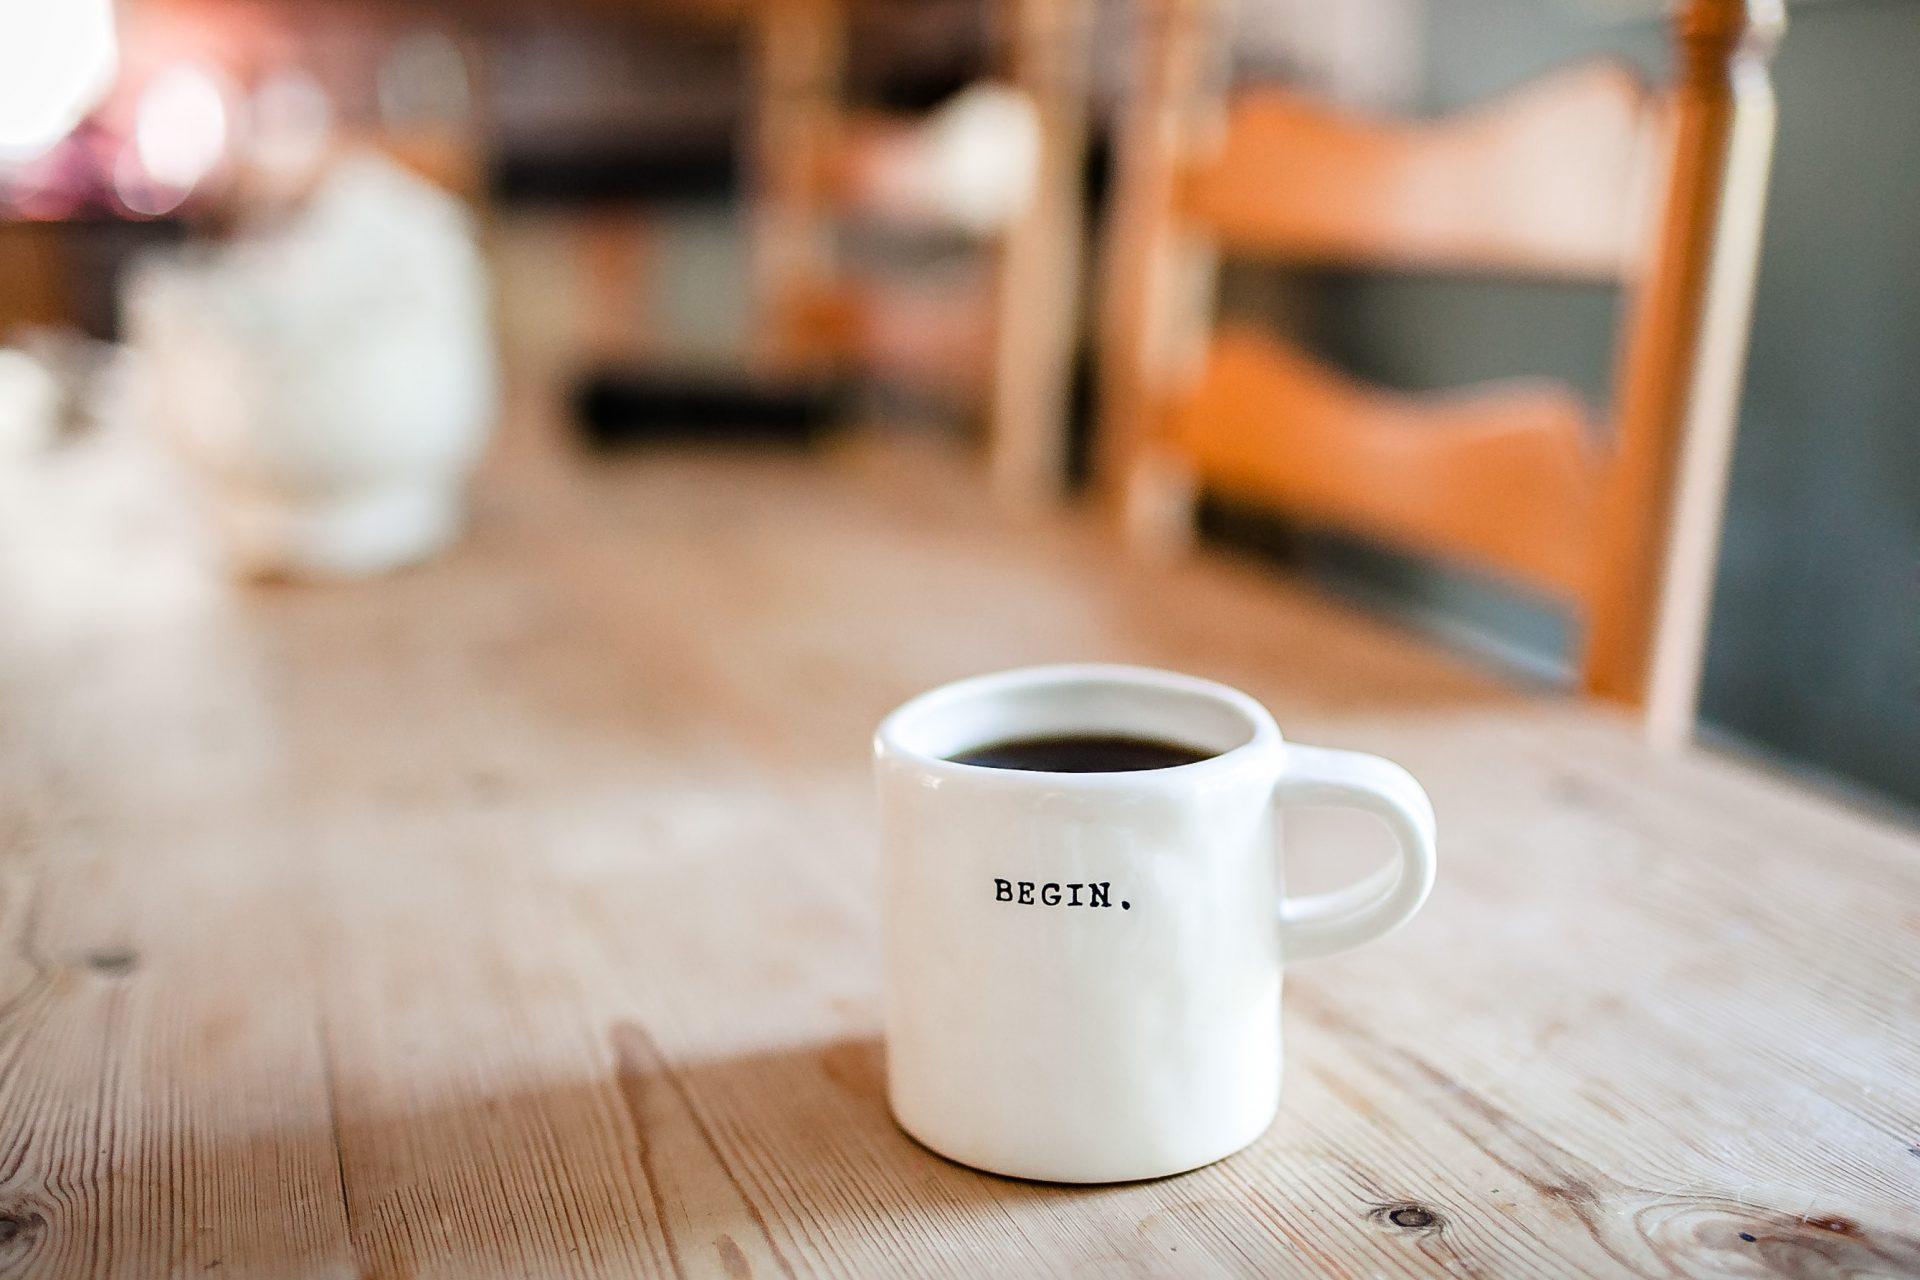 coffee in mug that says "Begin"